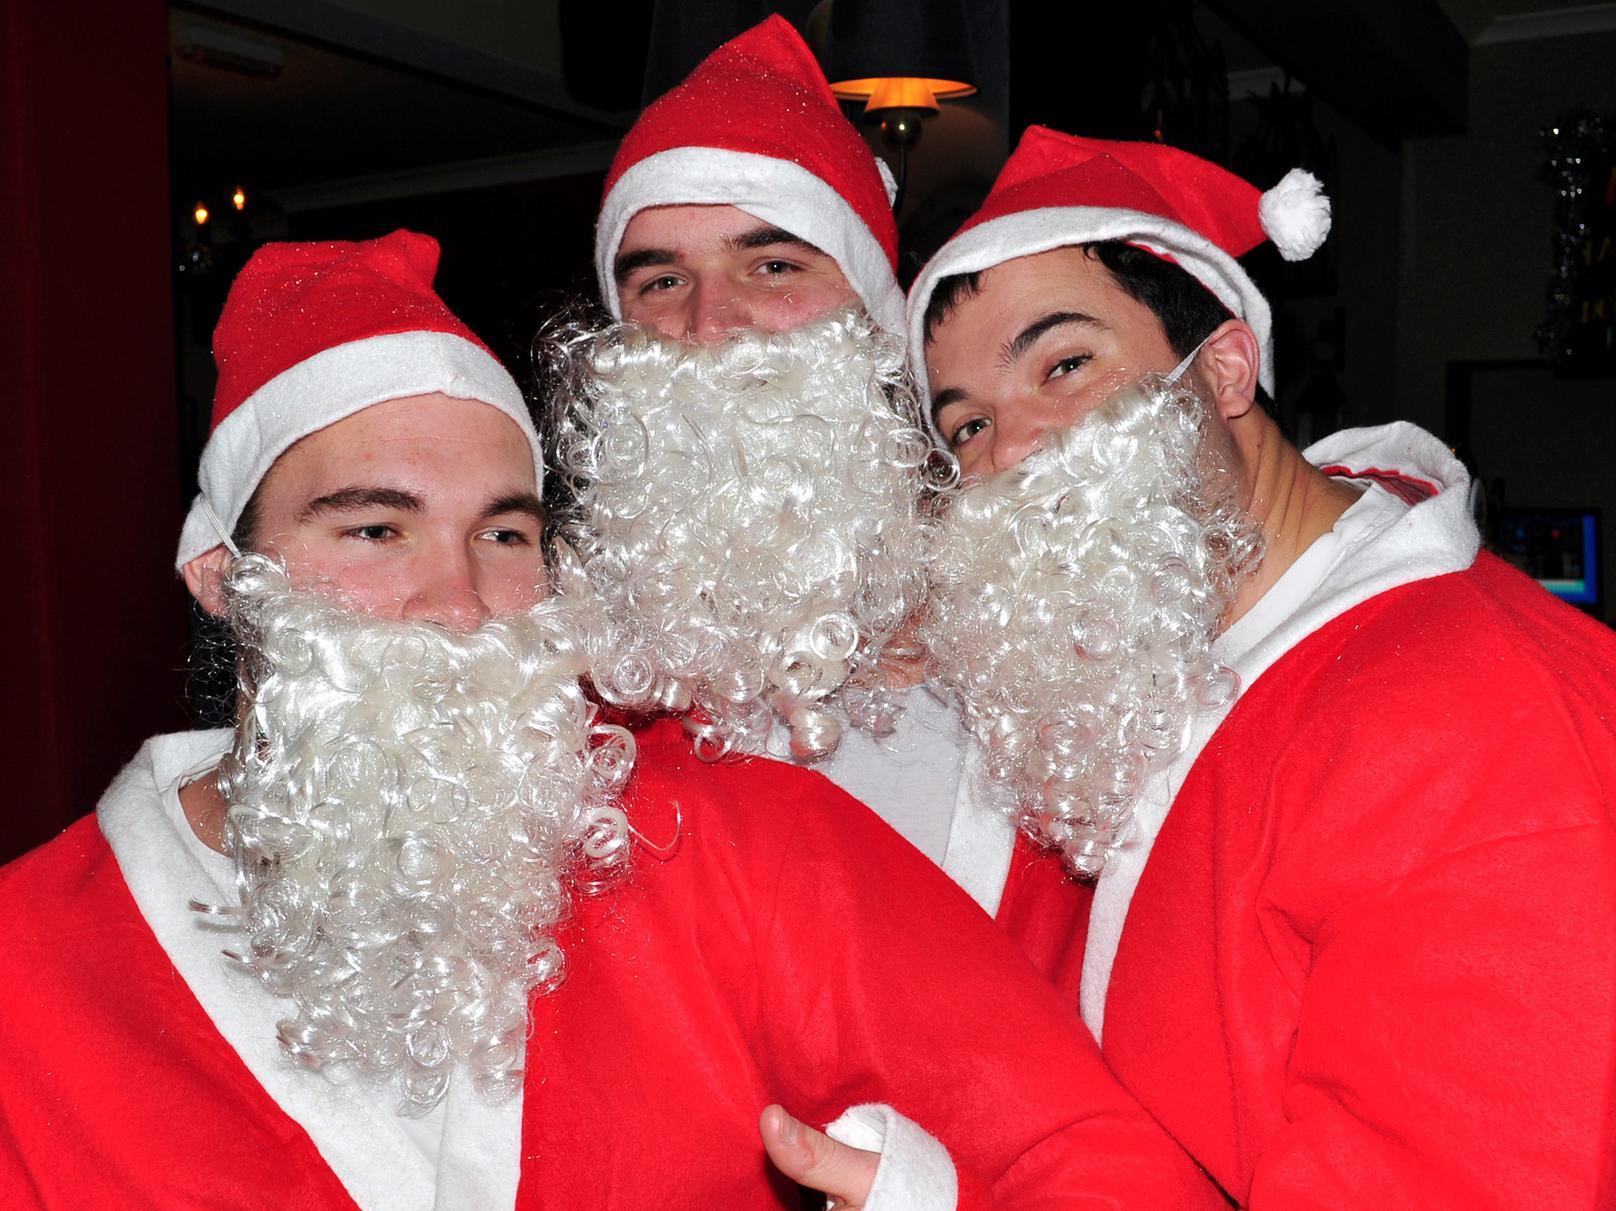 Paul, Craig and Shaun are the Santa Saints.